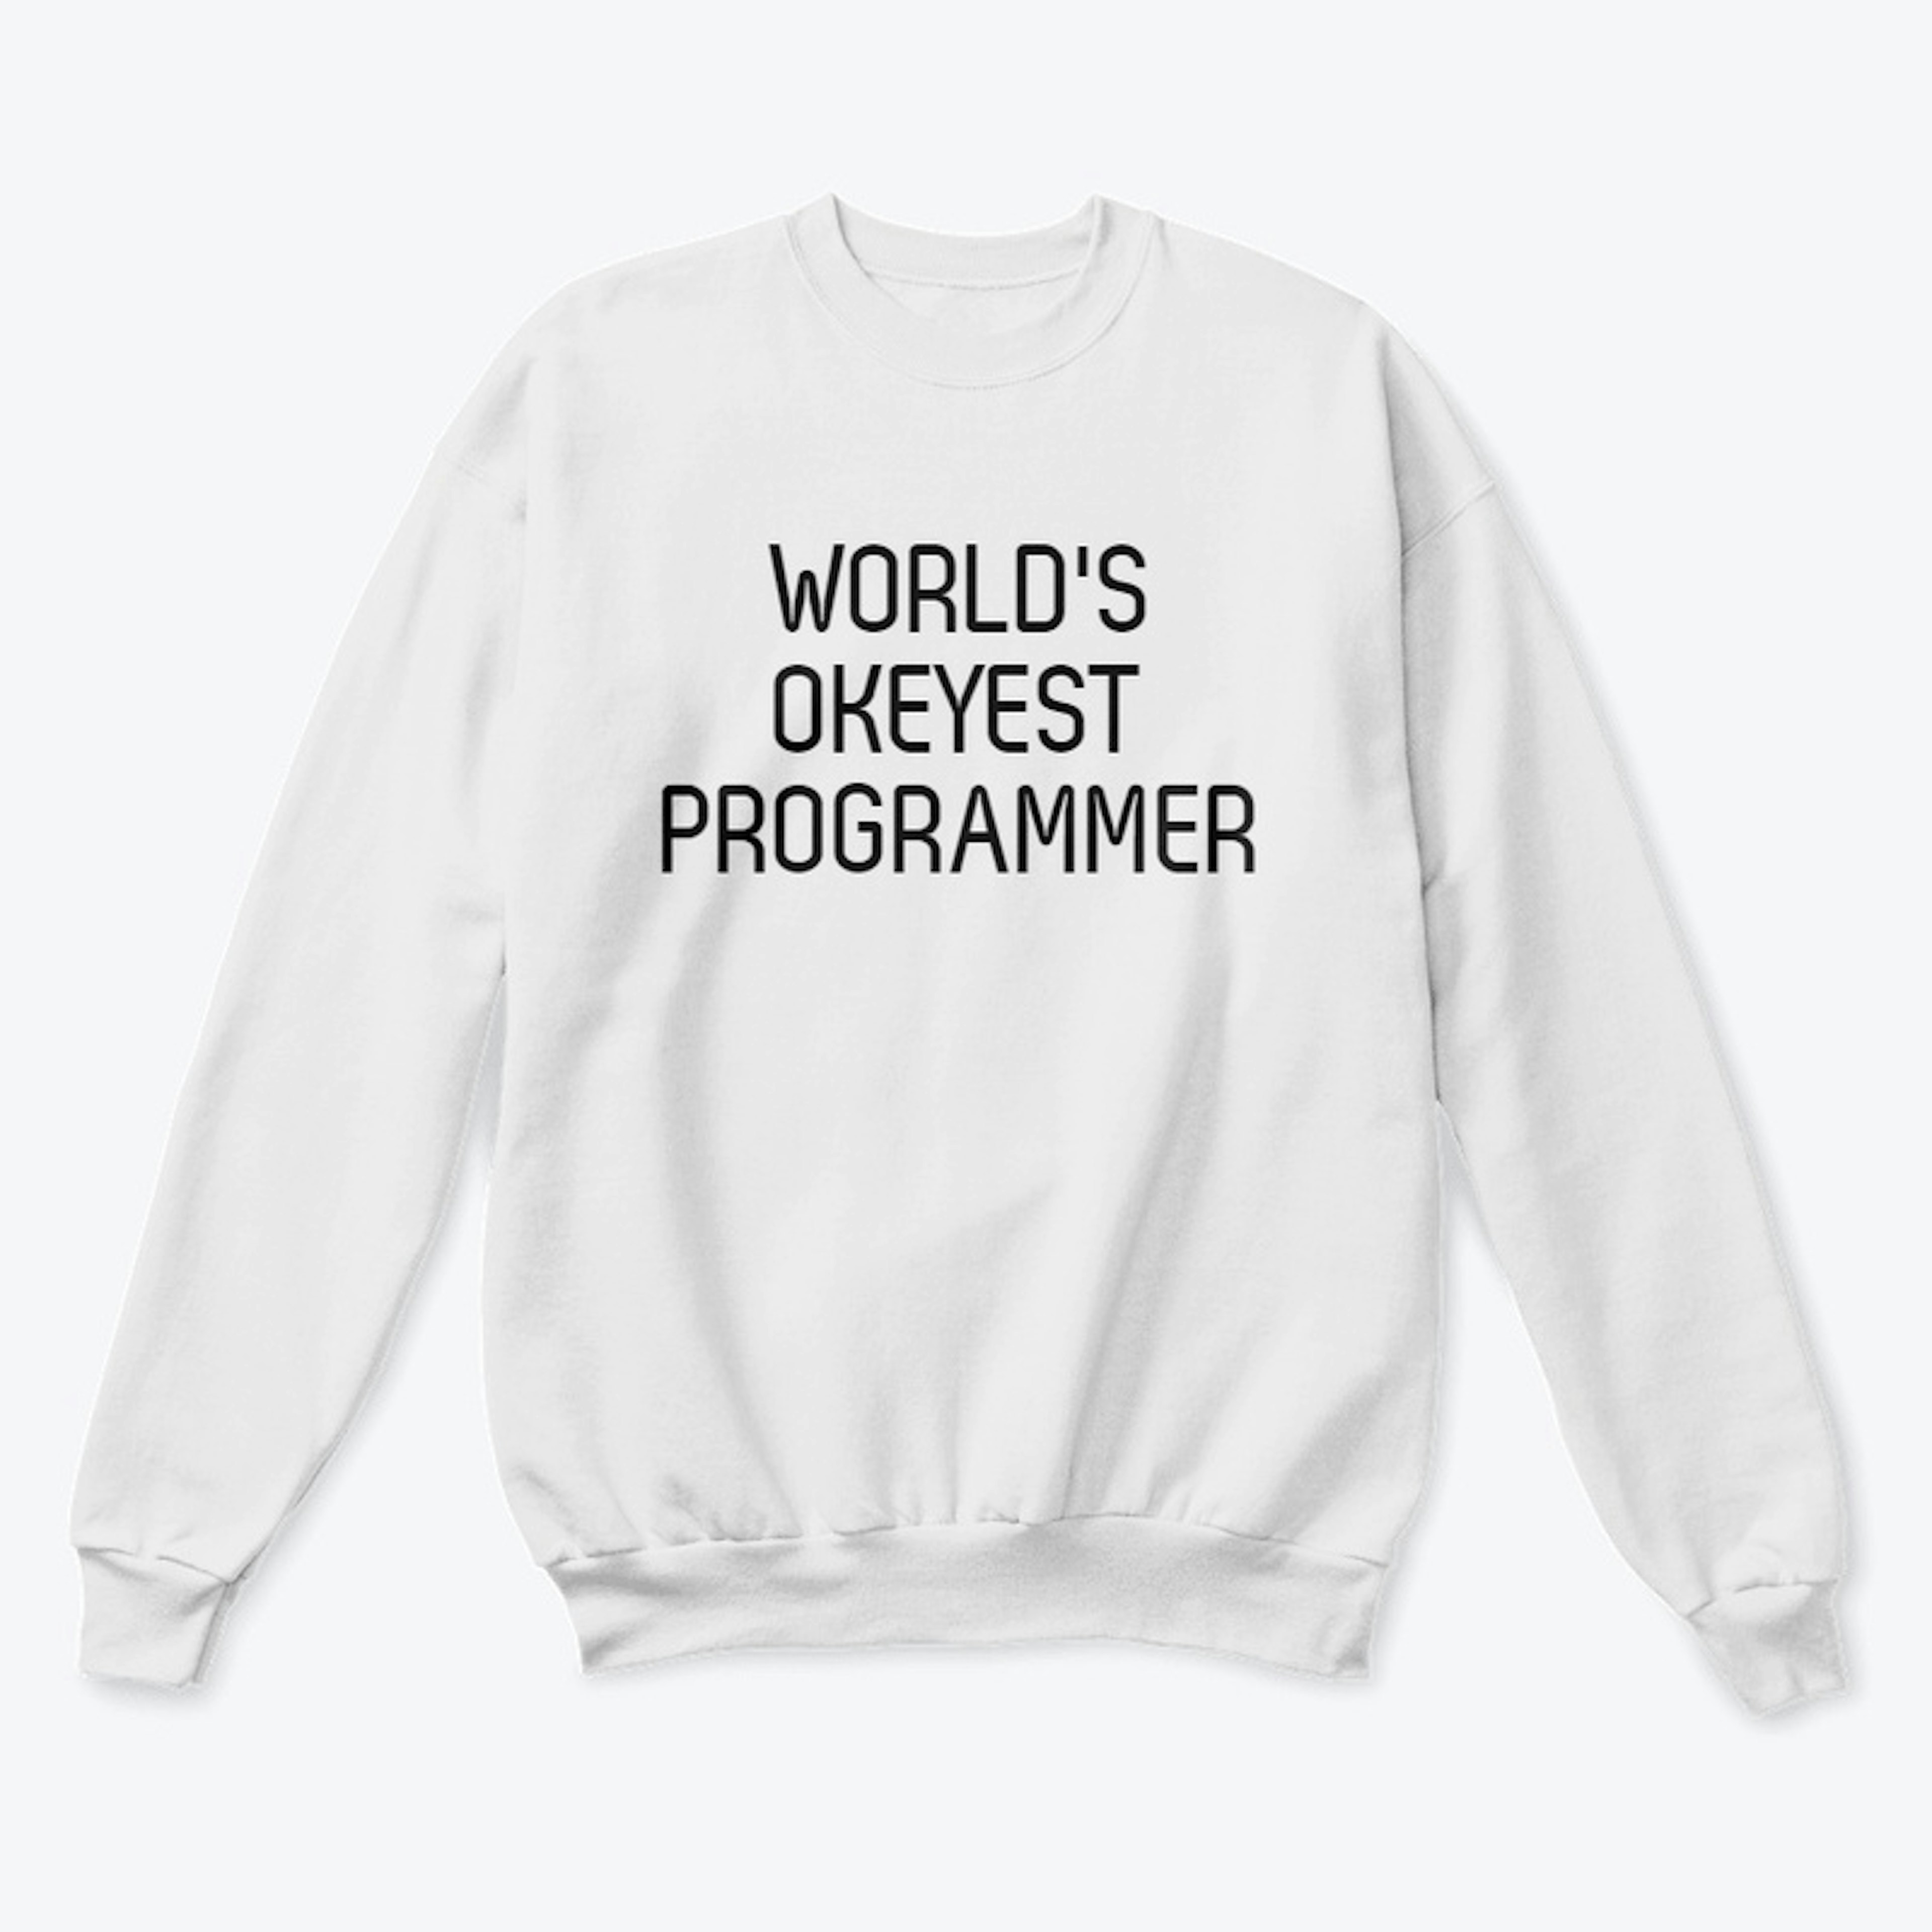 World's Okayest Programmer